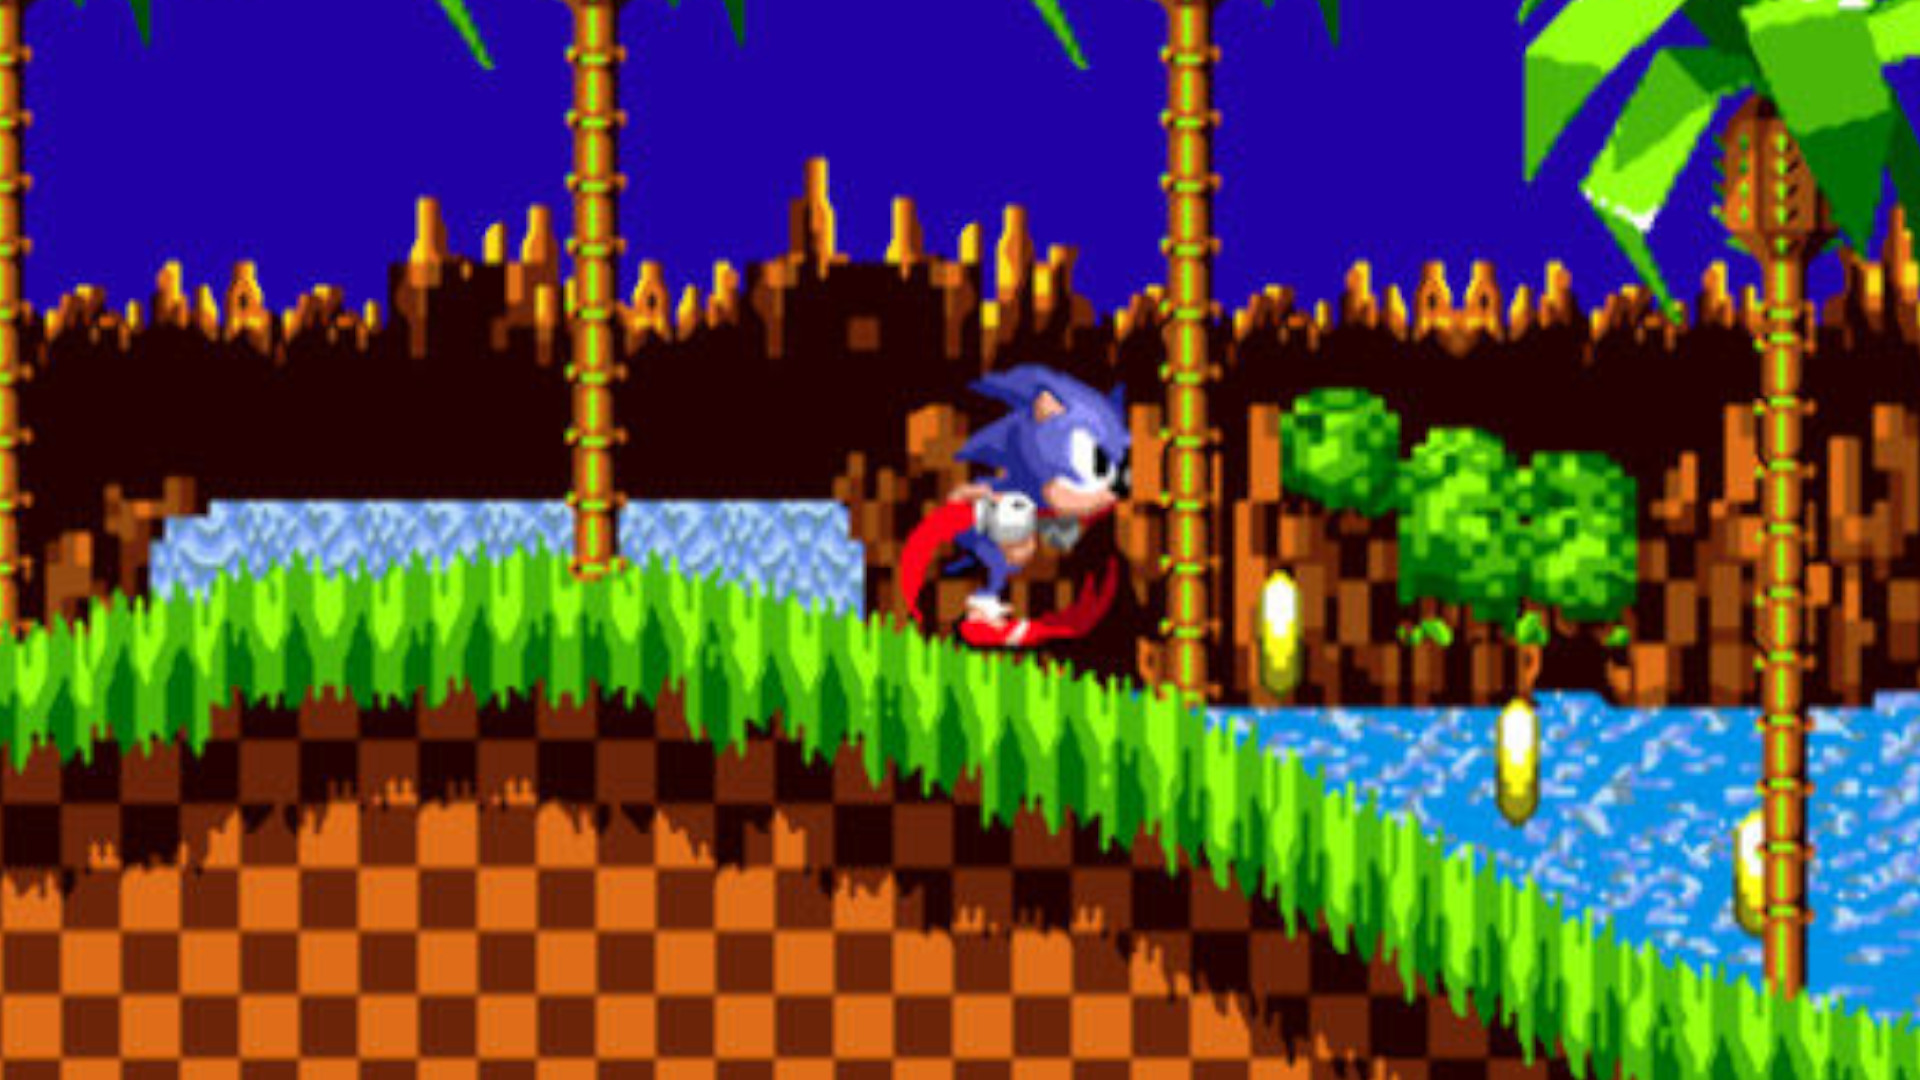 Sonic Retro - Second only to Sega